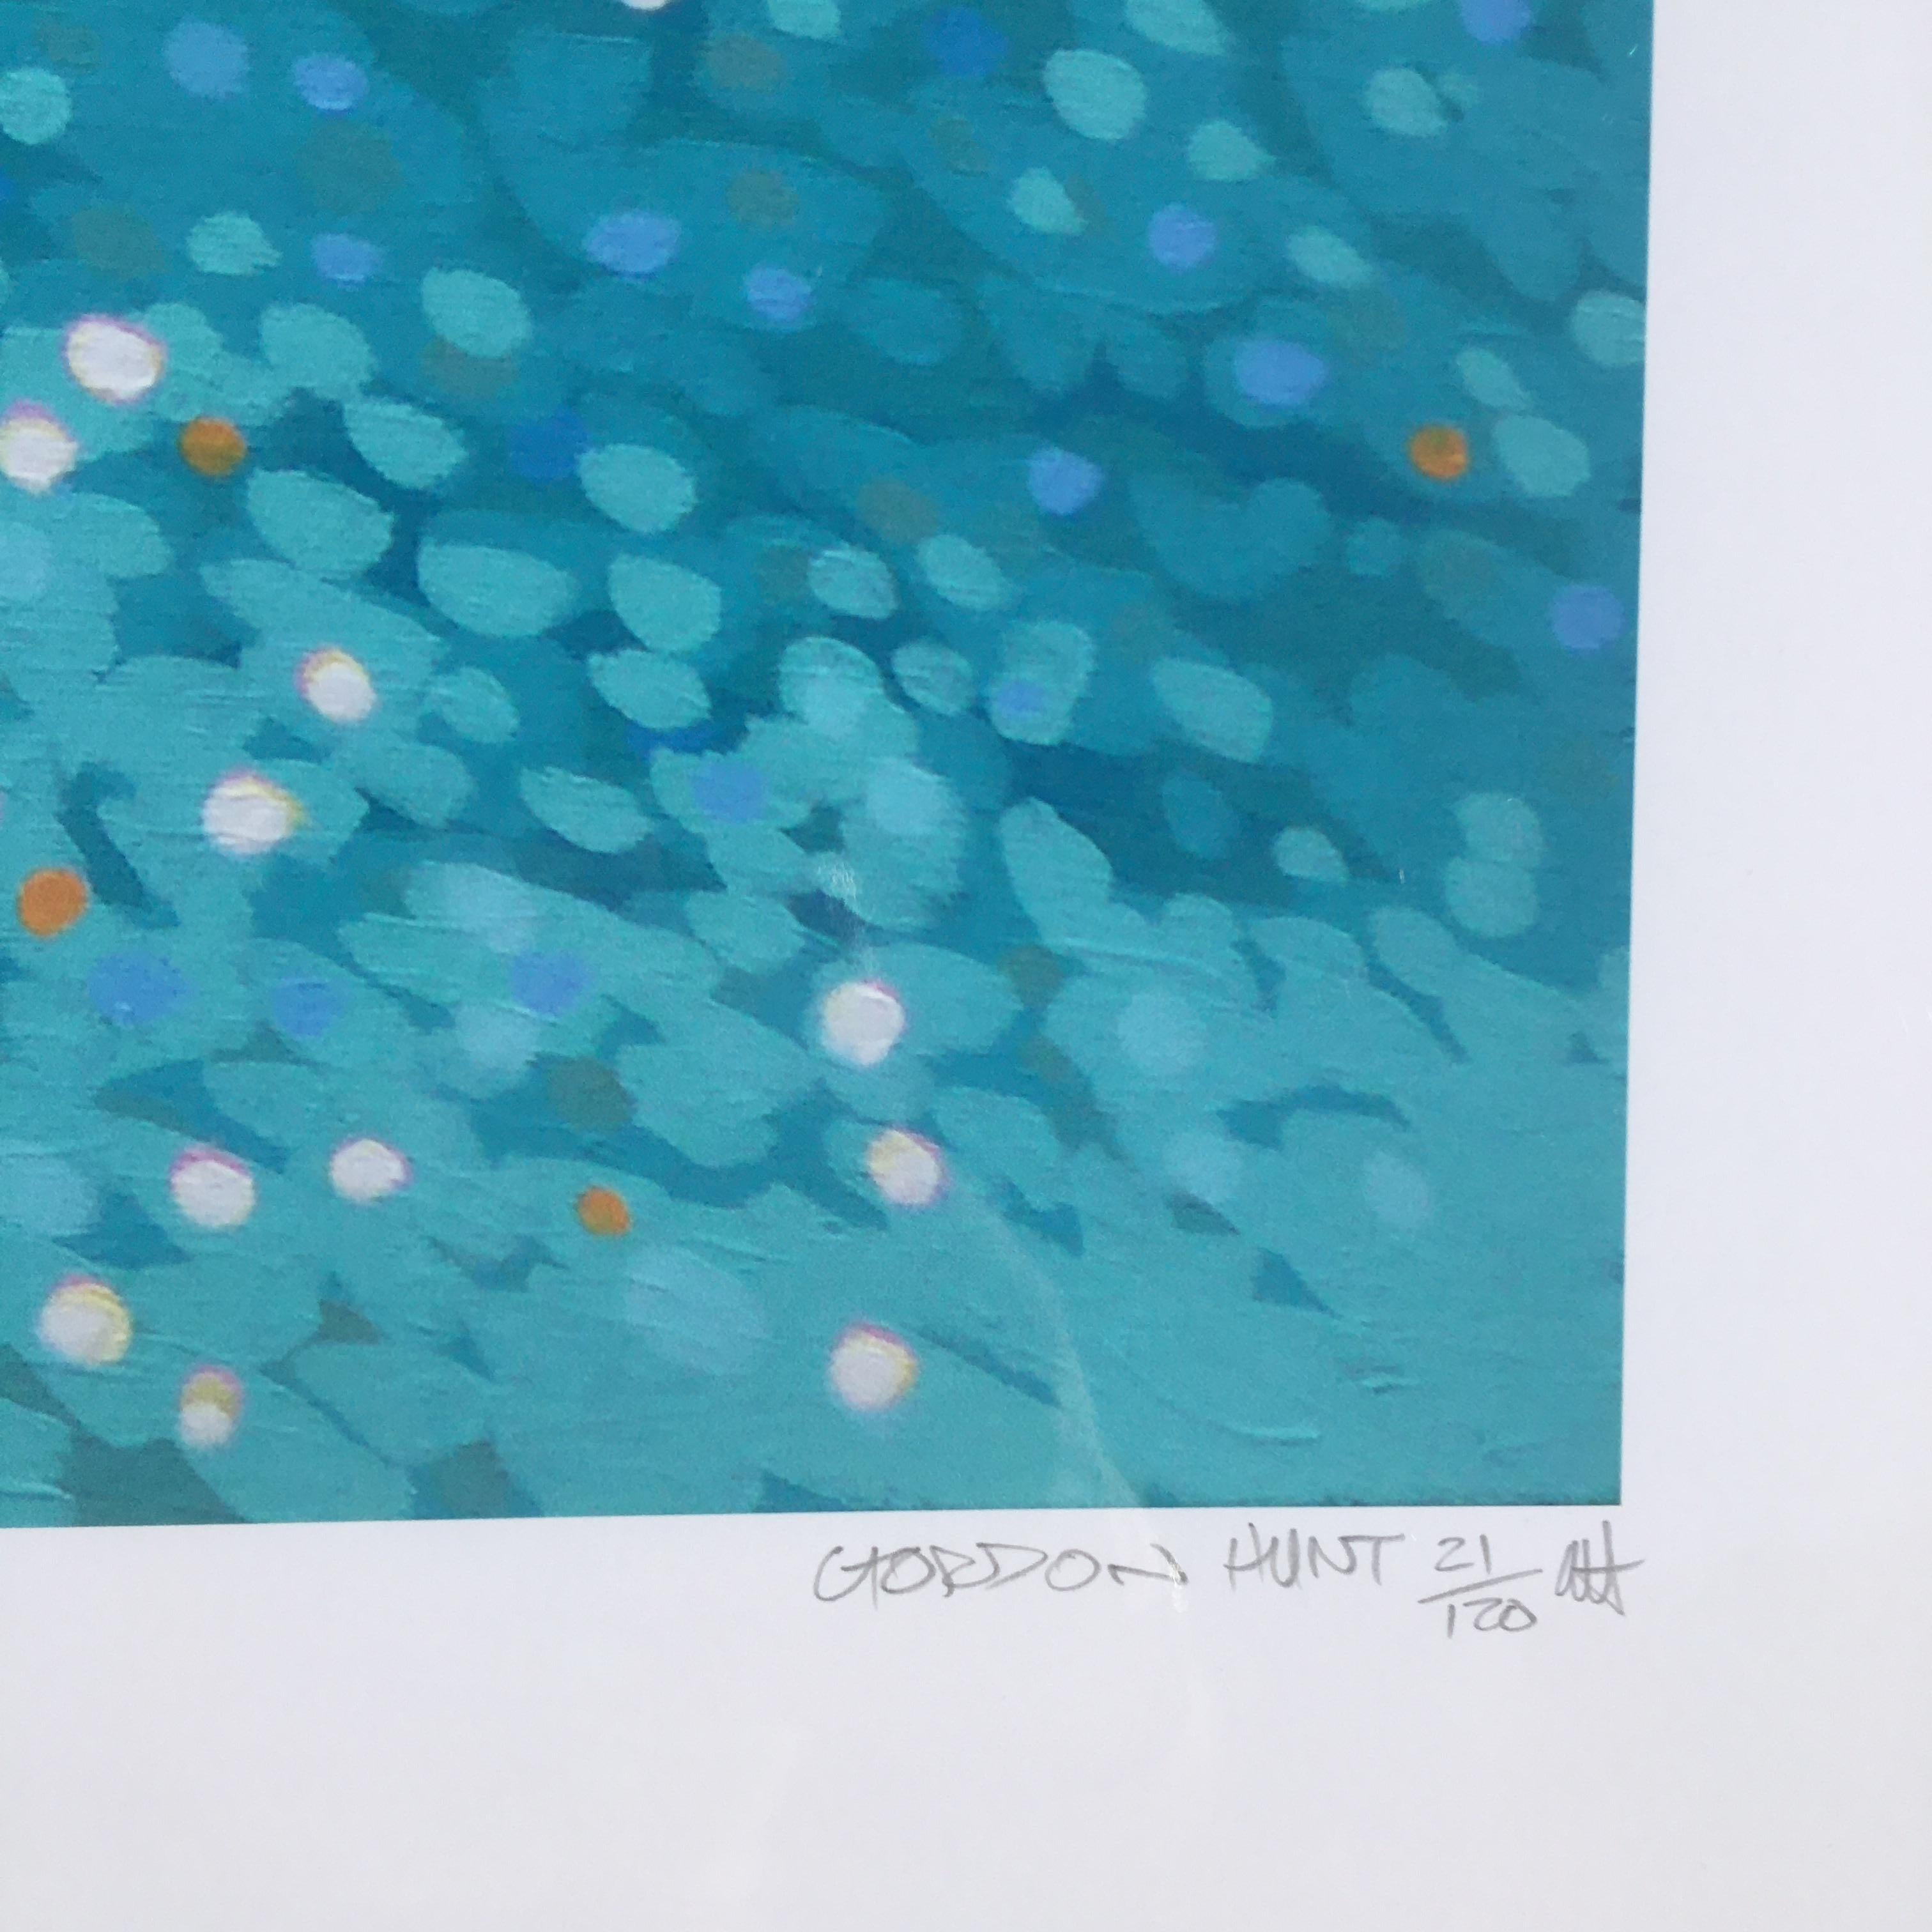 Gordon Hunt, Lantic Lunch, Limited Edition Seascape Print, Bright Art, Blue Art 2